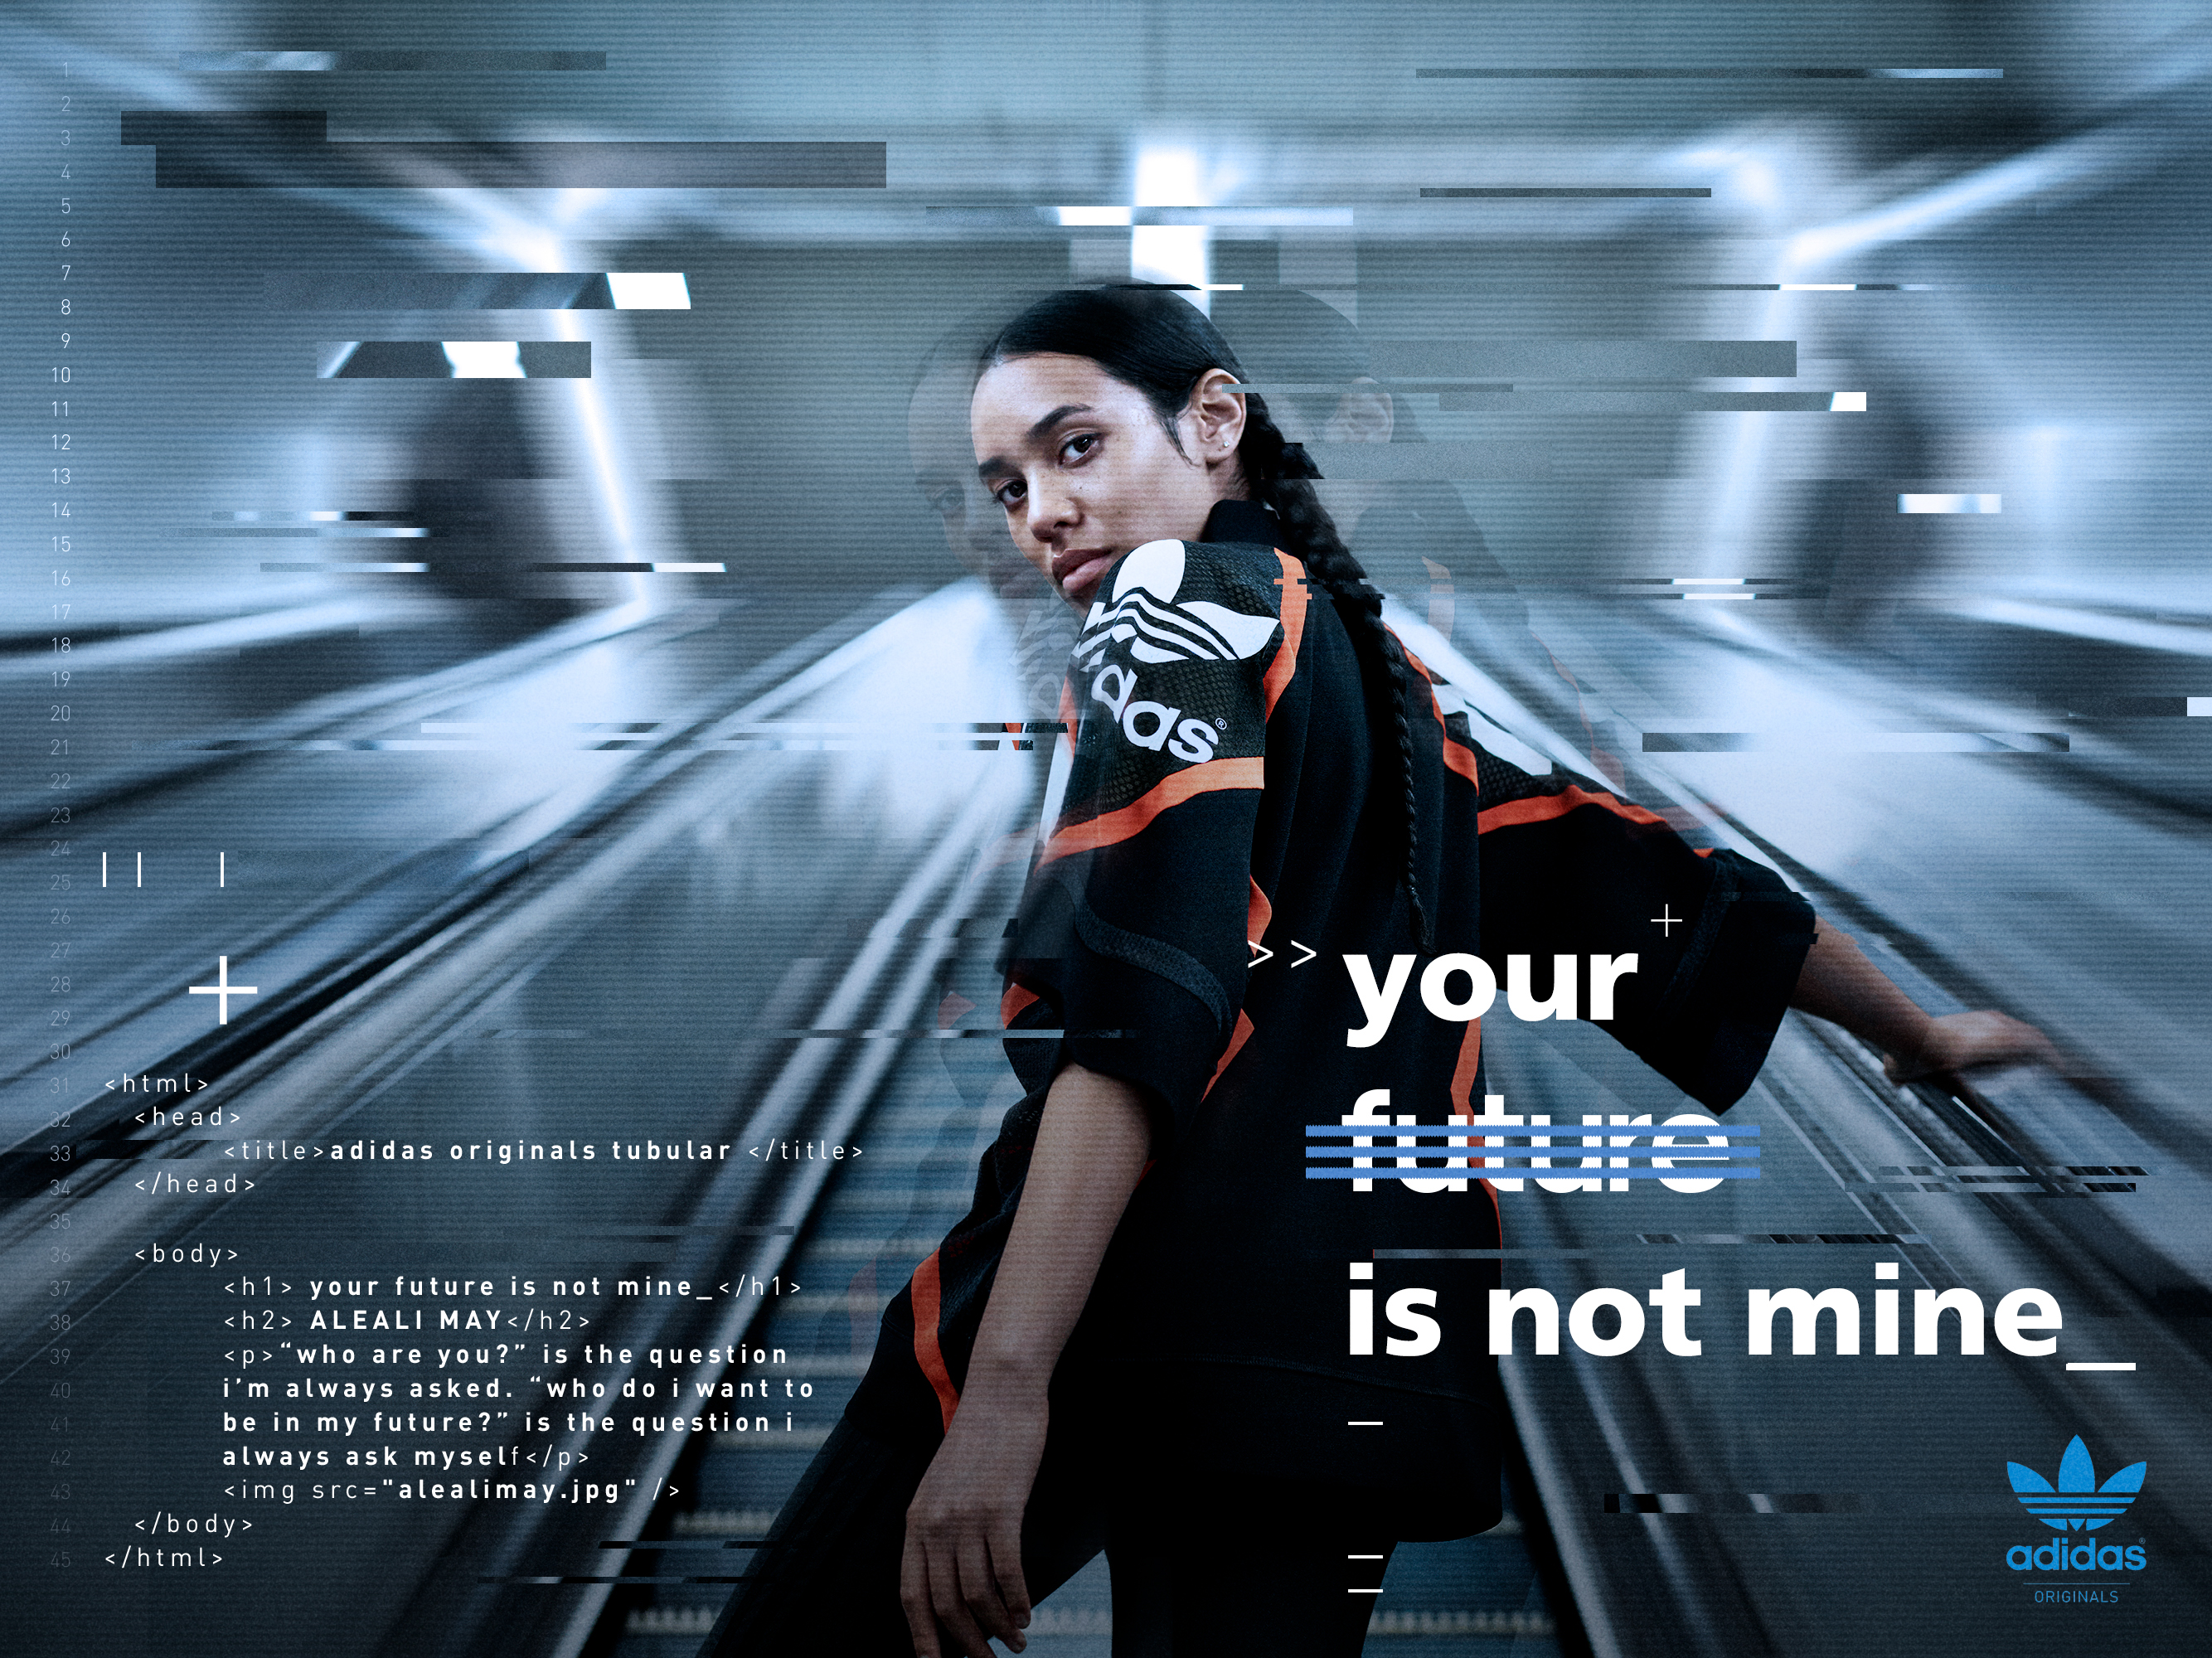 This is your future. Реклама адидас. Рекламный плакат адидас. Рекламные кампании adidas. Печатная реклама адидас.